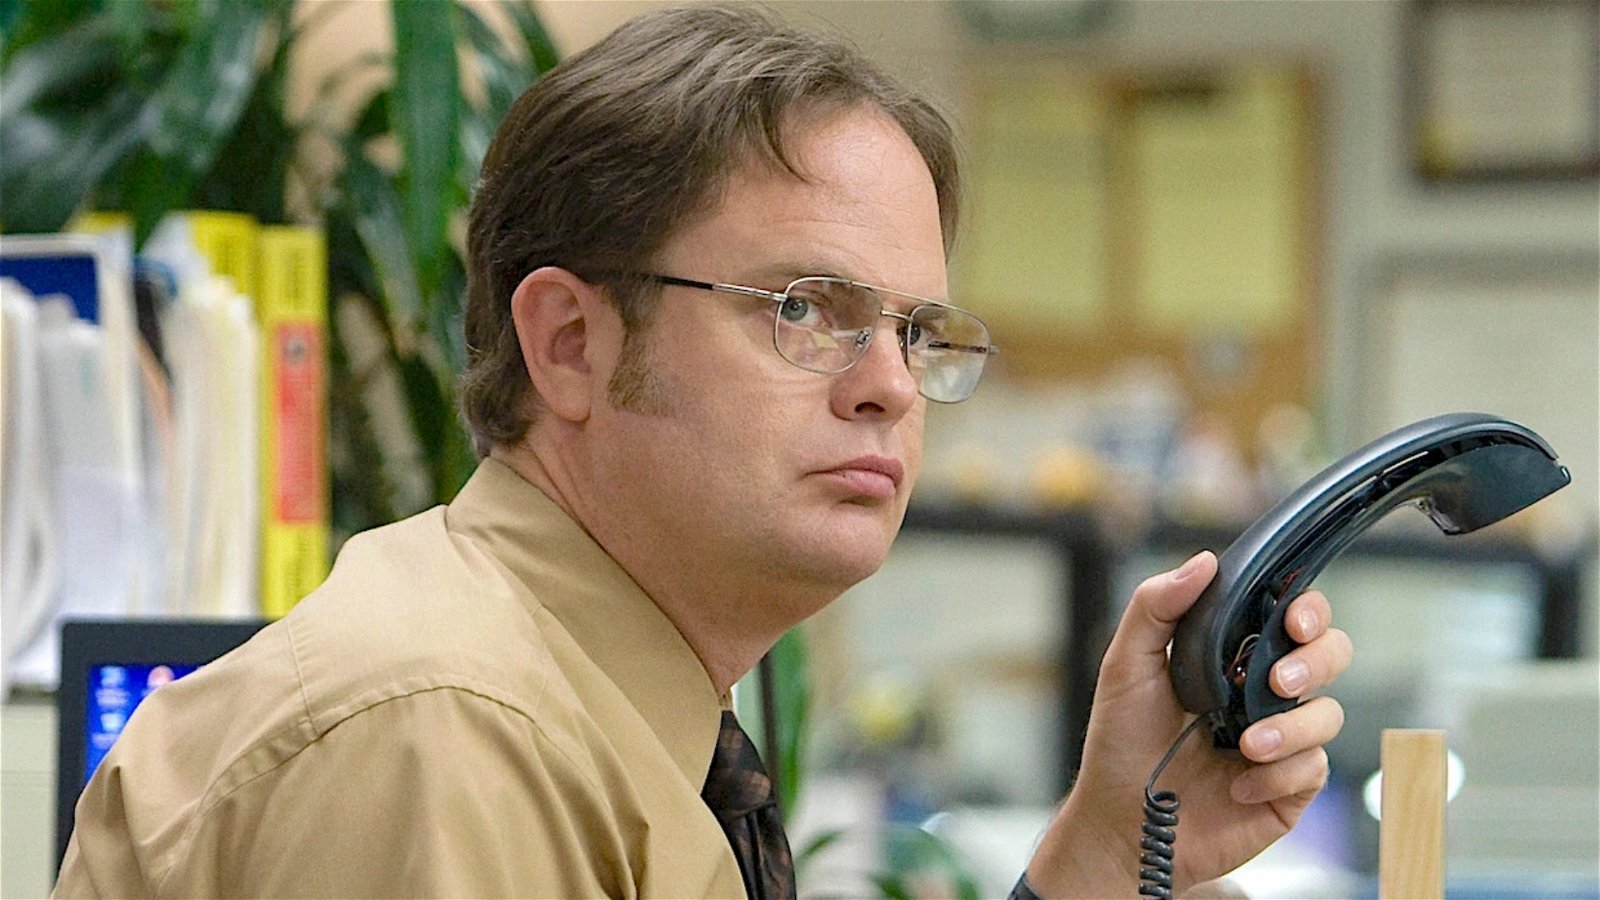 Dwight de The Office